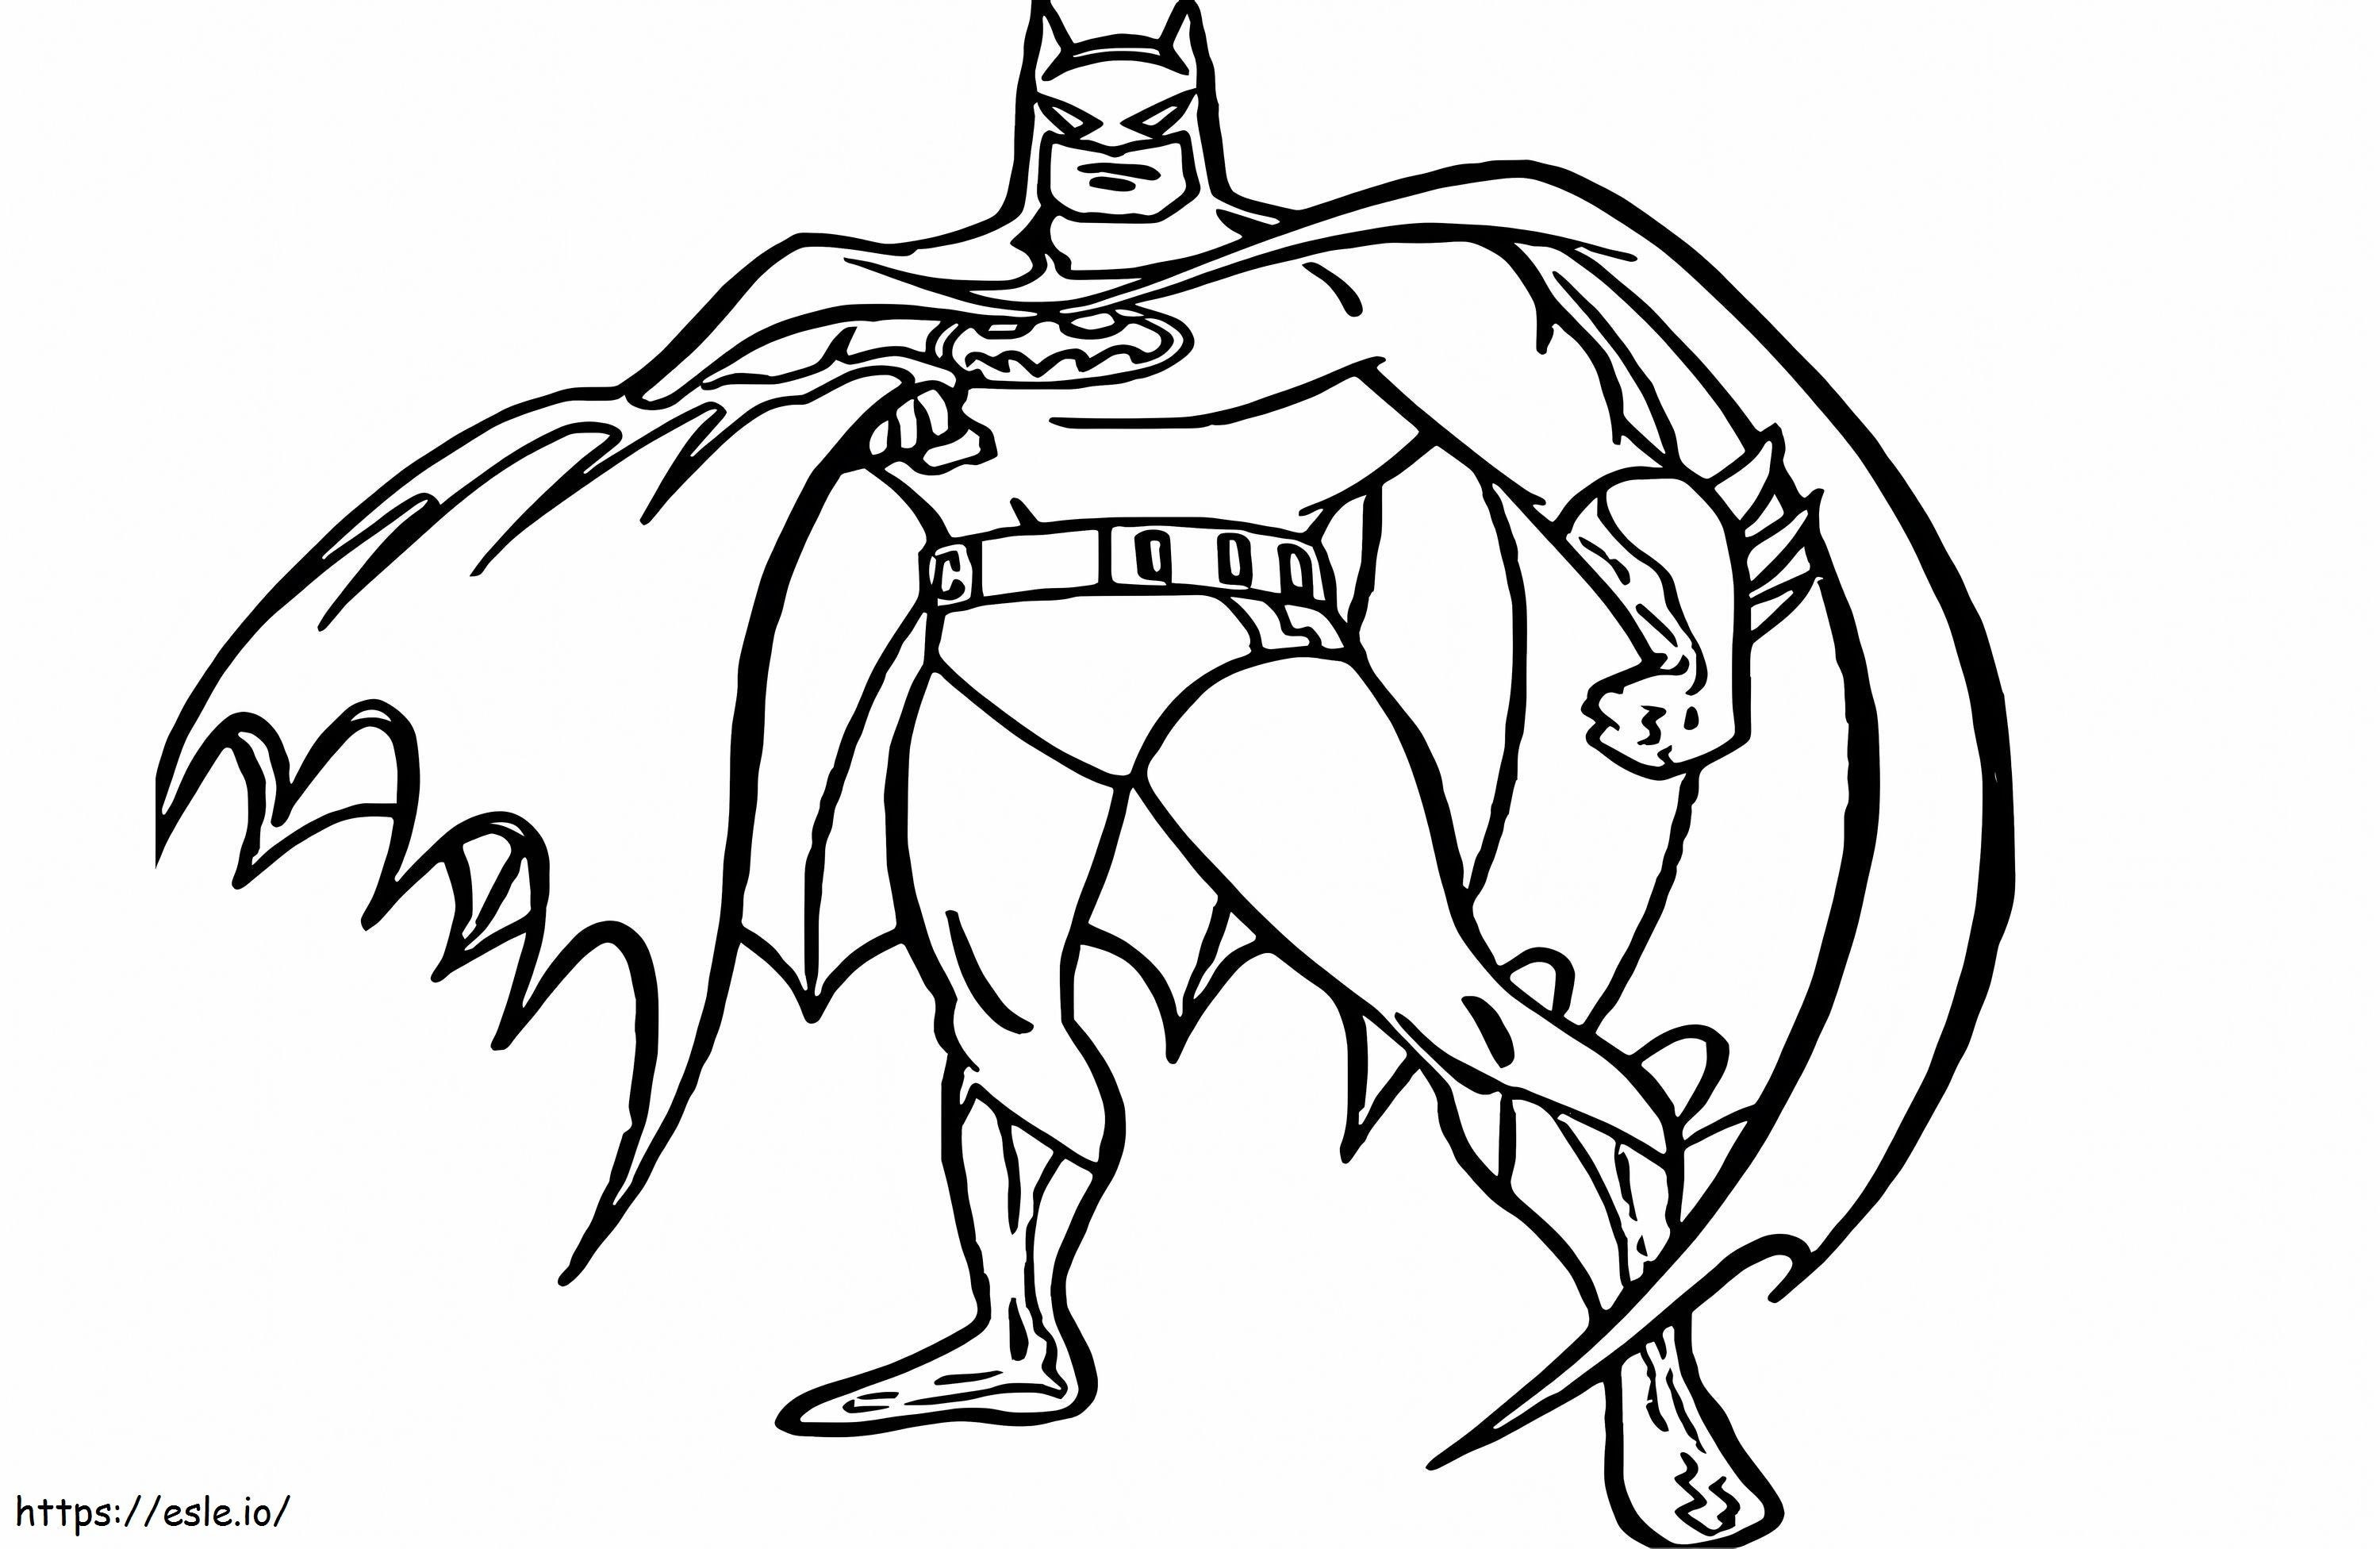 Batman Holding His Cape coloring page